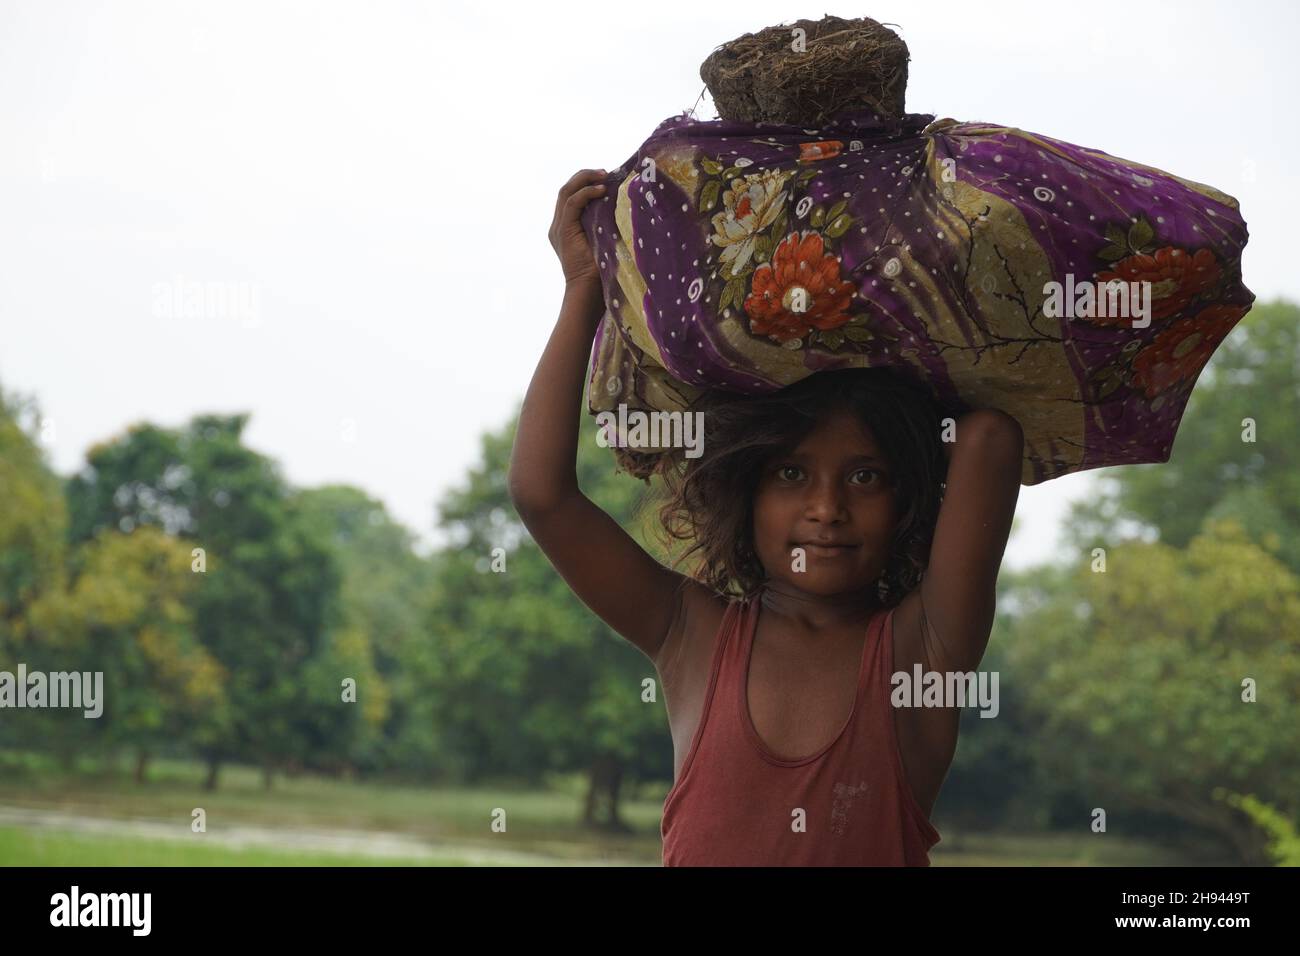 poor children in india image Stock Photo